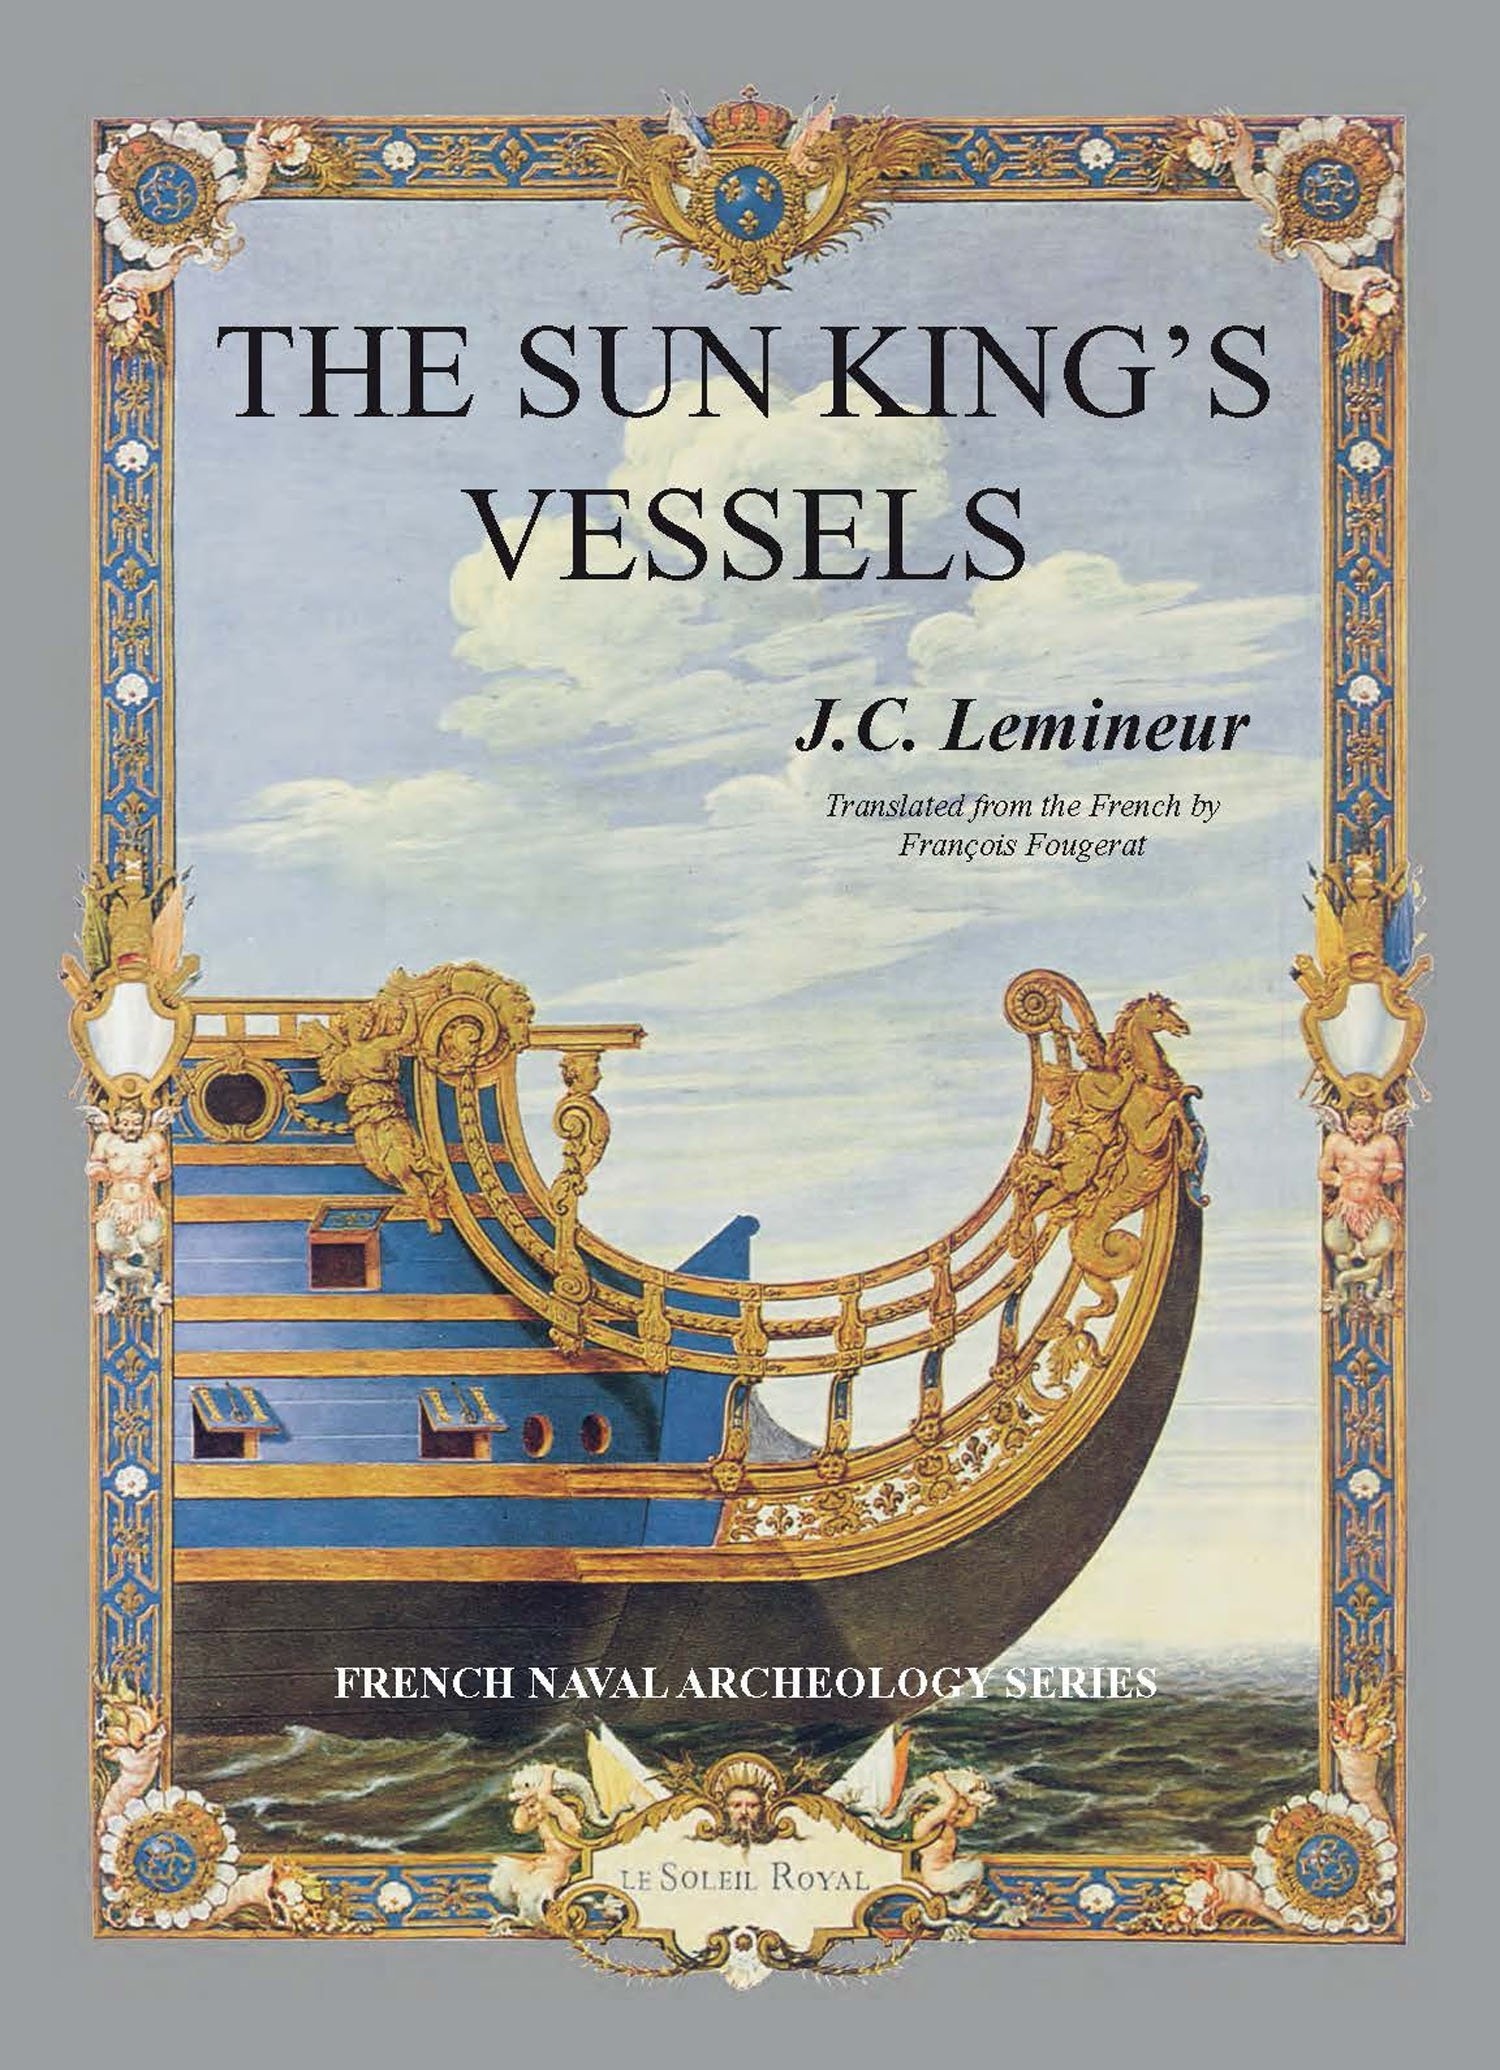 The sun king's vessels